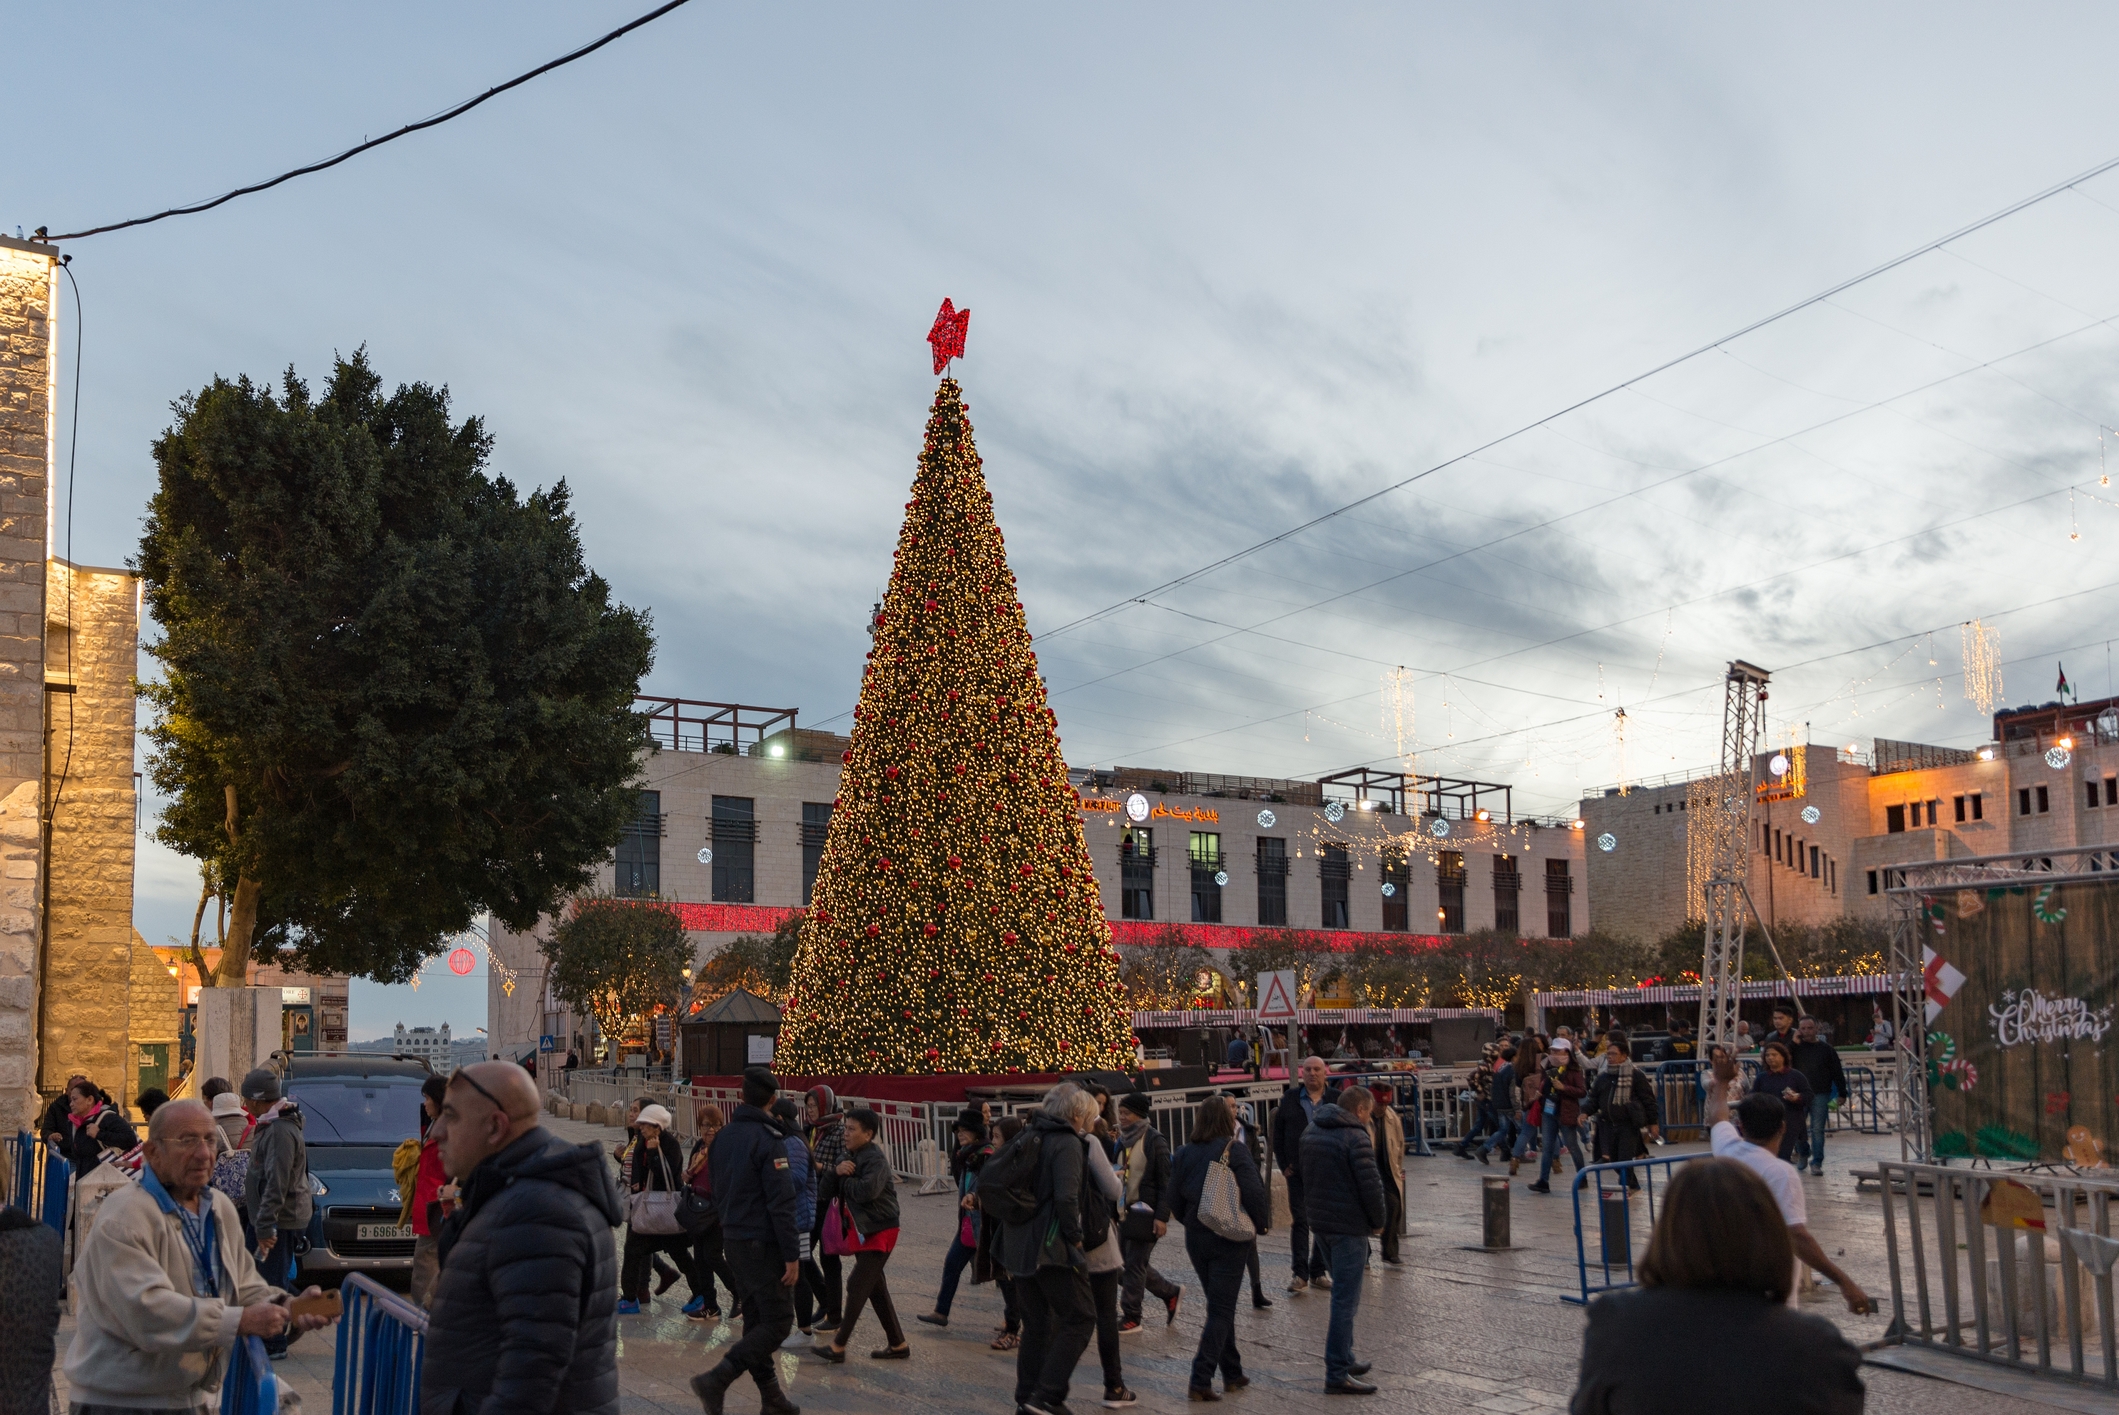 Winter Christmas Festival in Israel